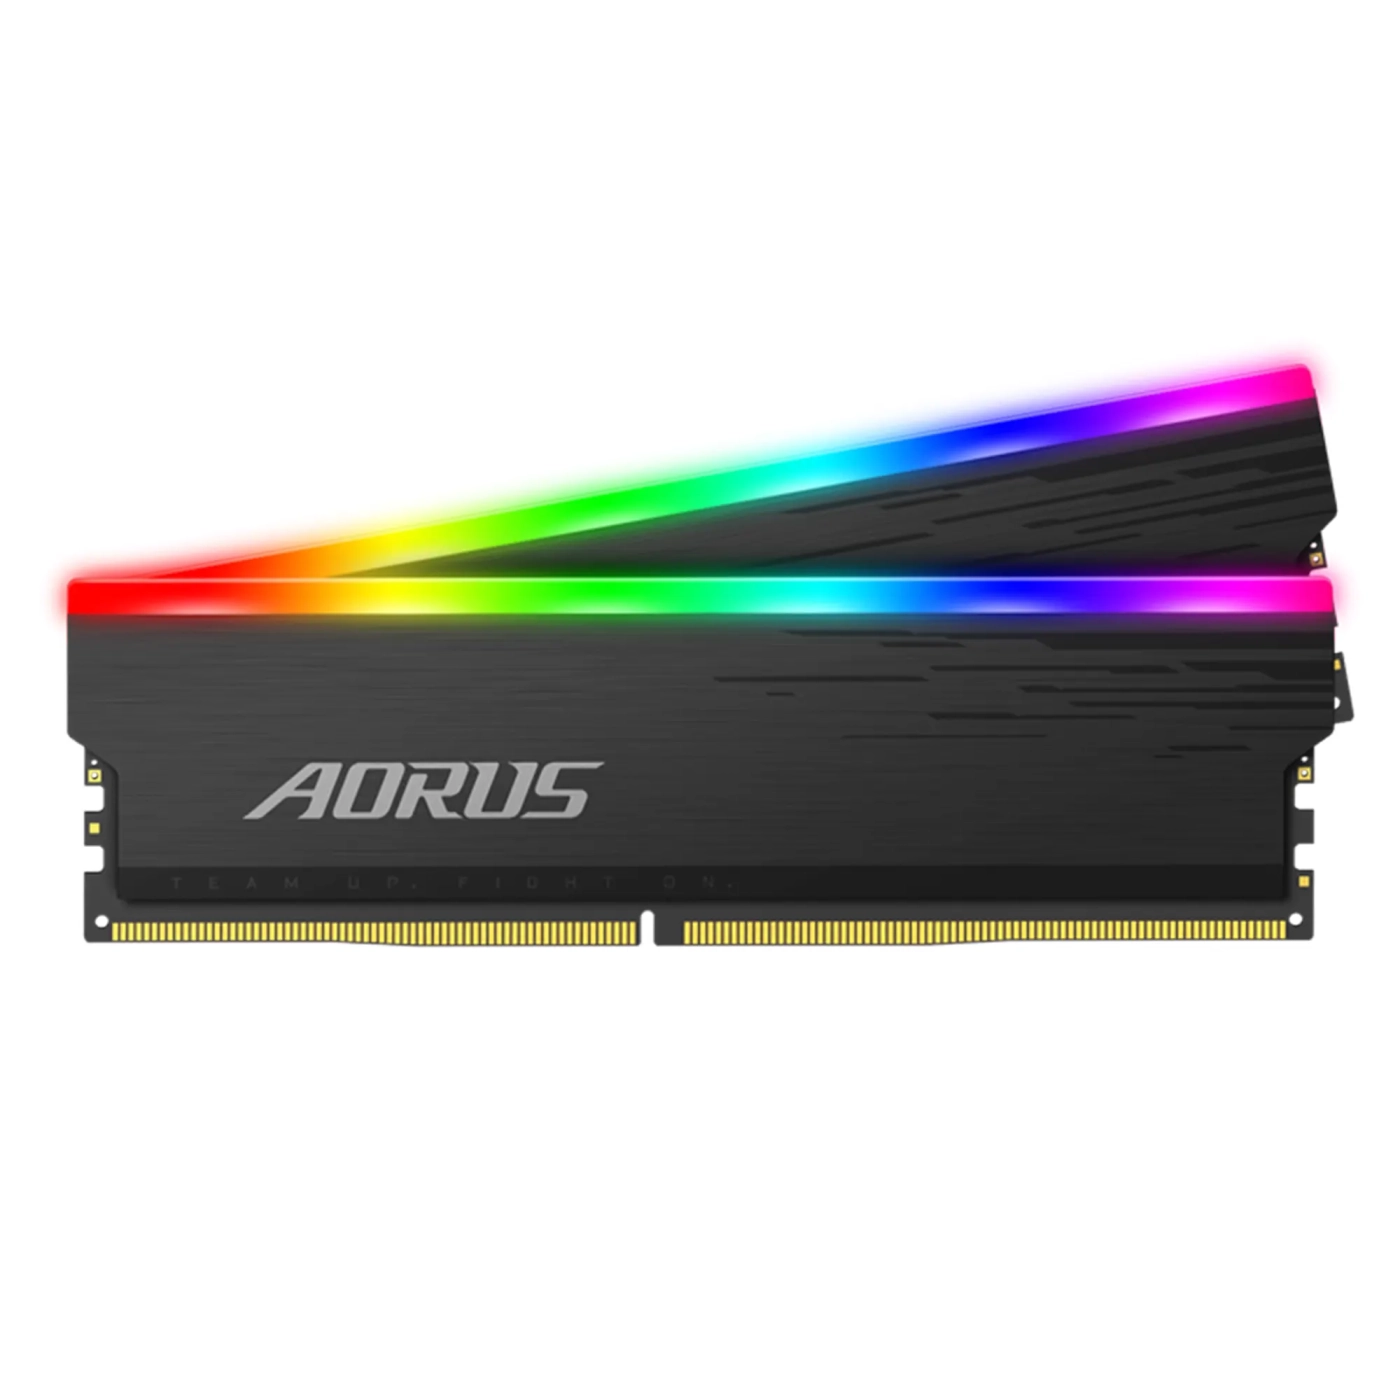 Купить Модуль памяти Gigabyte Aorus RGB DDR4-3333 16GB (2x8GB) (GP-ARS16G33) - фото 1